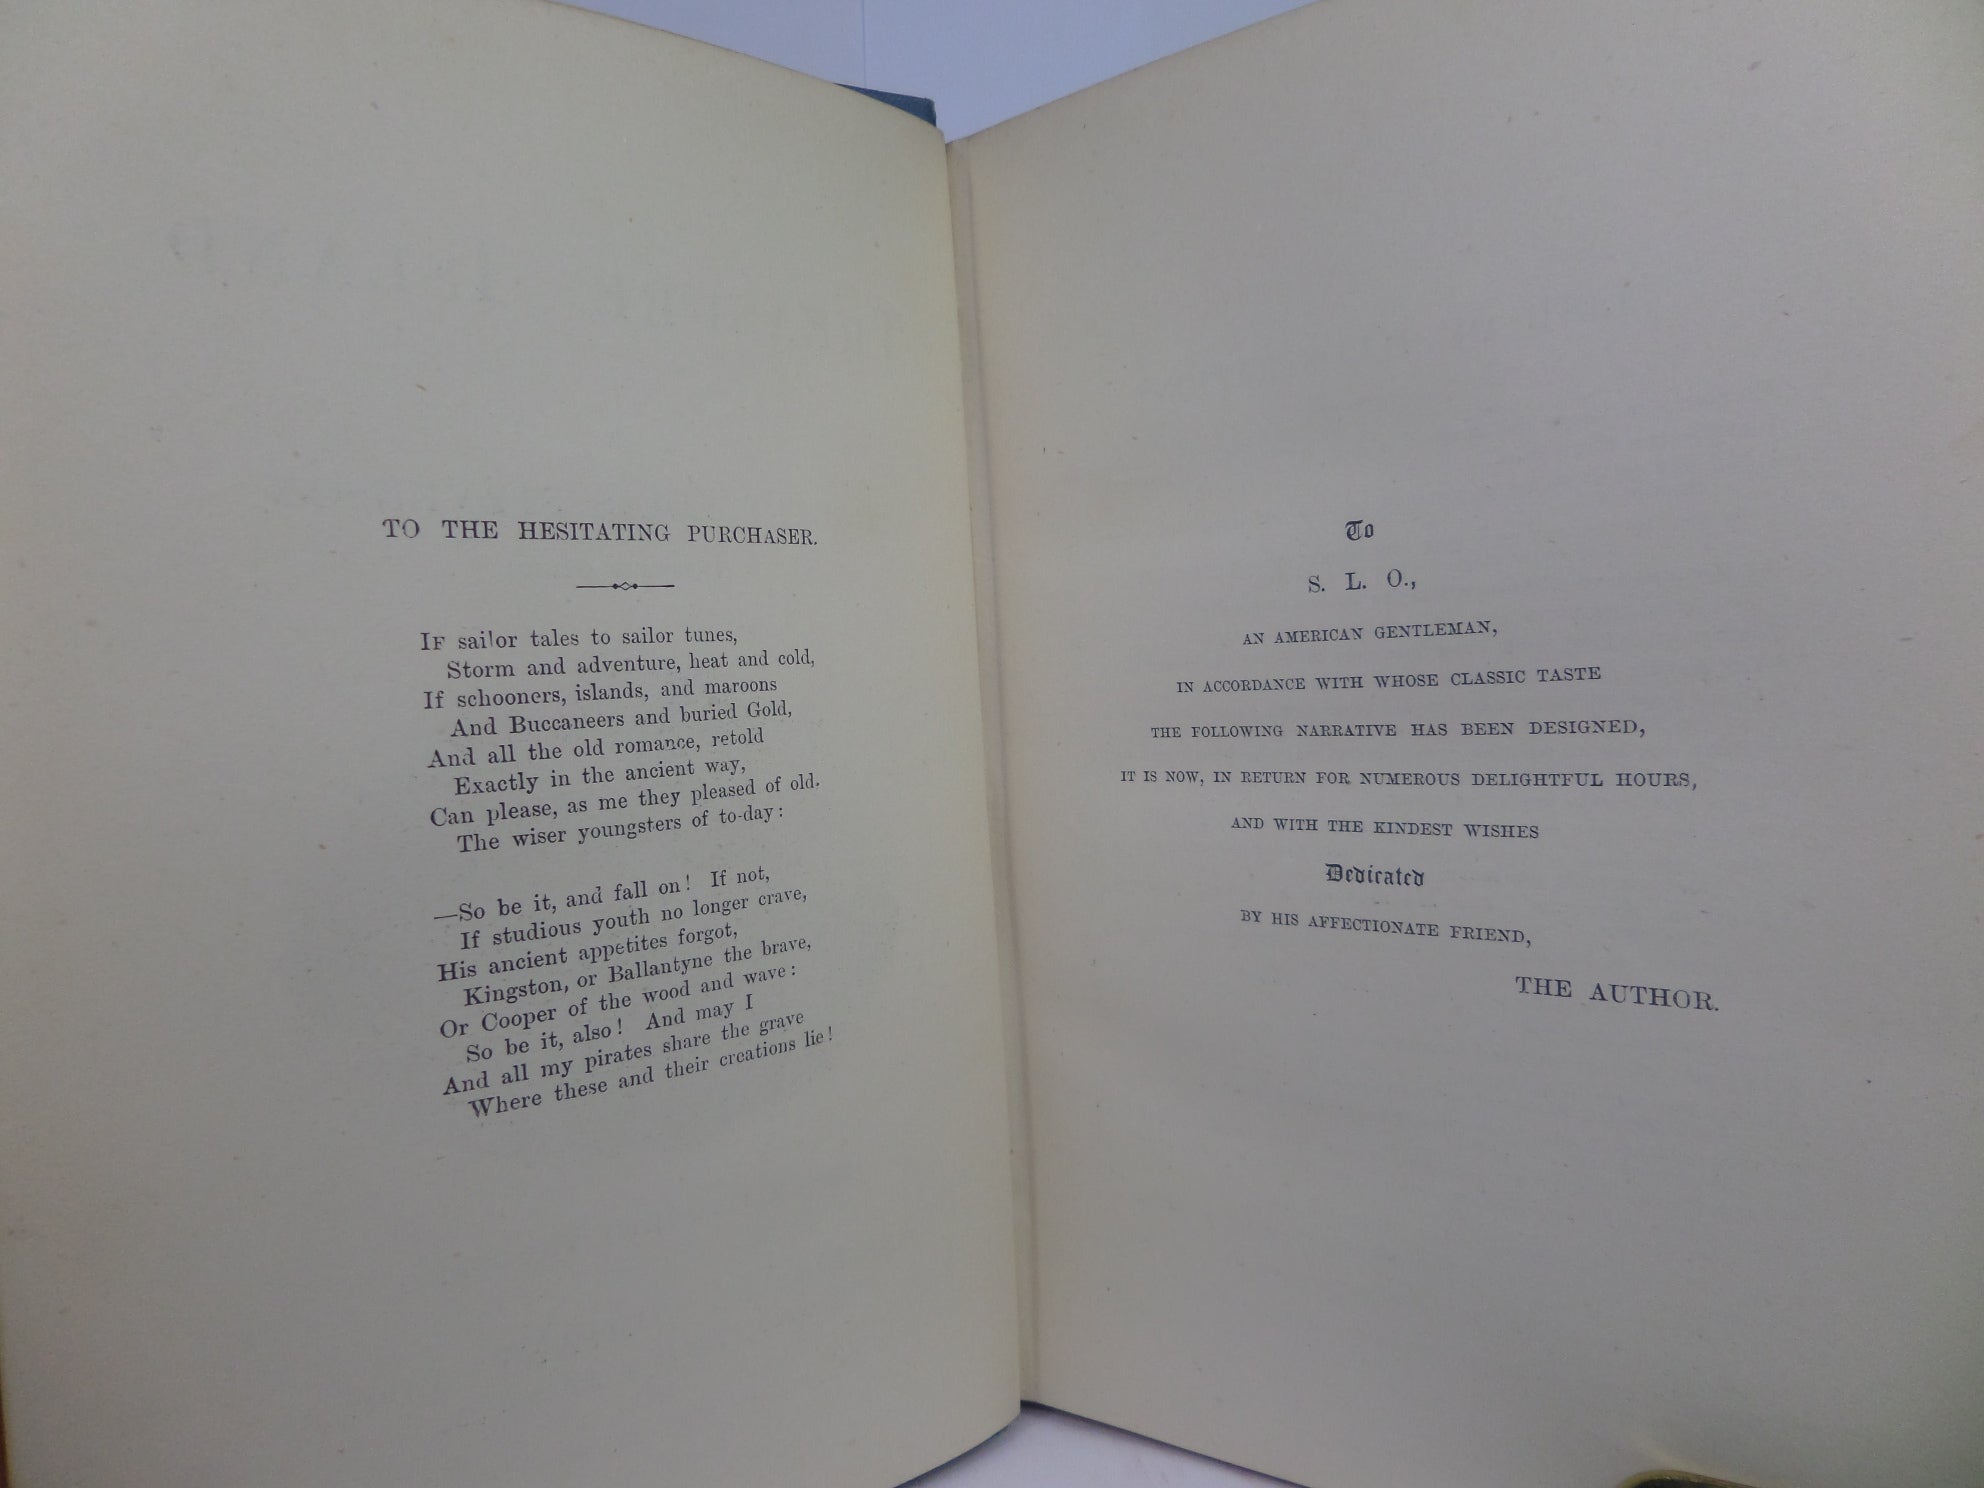 TREASURE ISLAND BY ROBERT LOUIS STEVENSON 1897 ILLUSTRATED EDITION